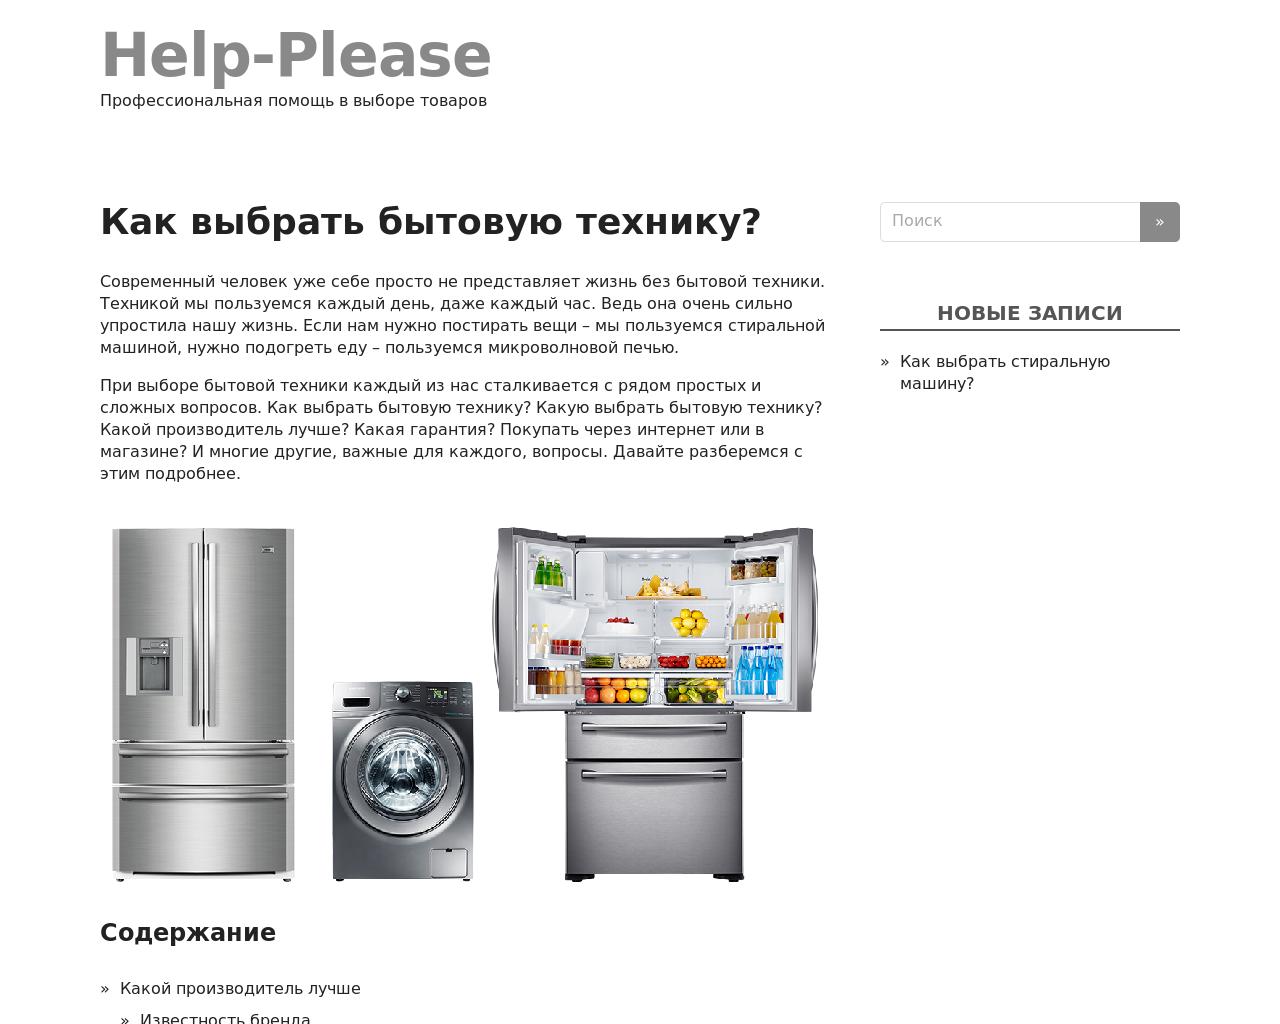 Изображение сайта help-please.ru в разрешении 1280x1024